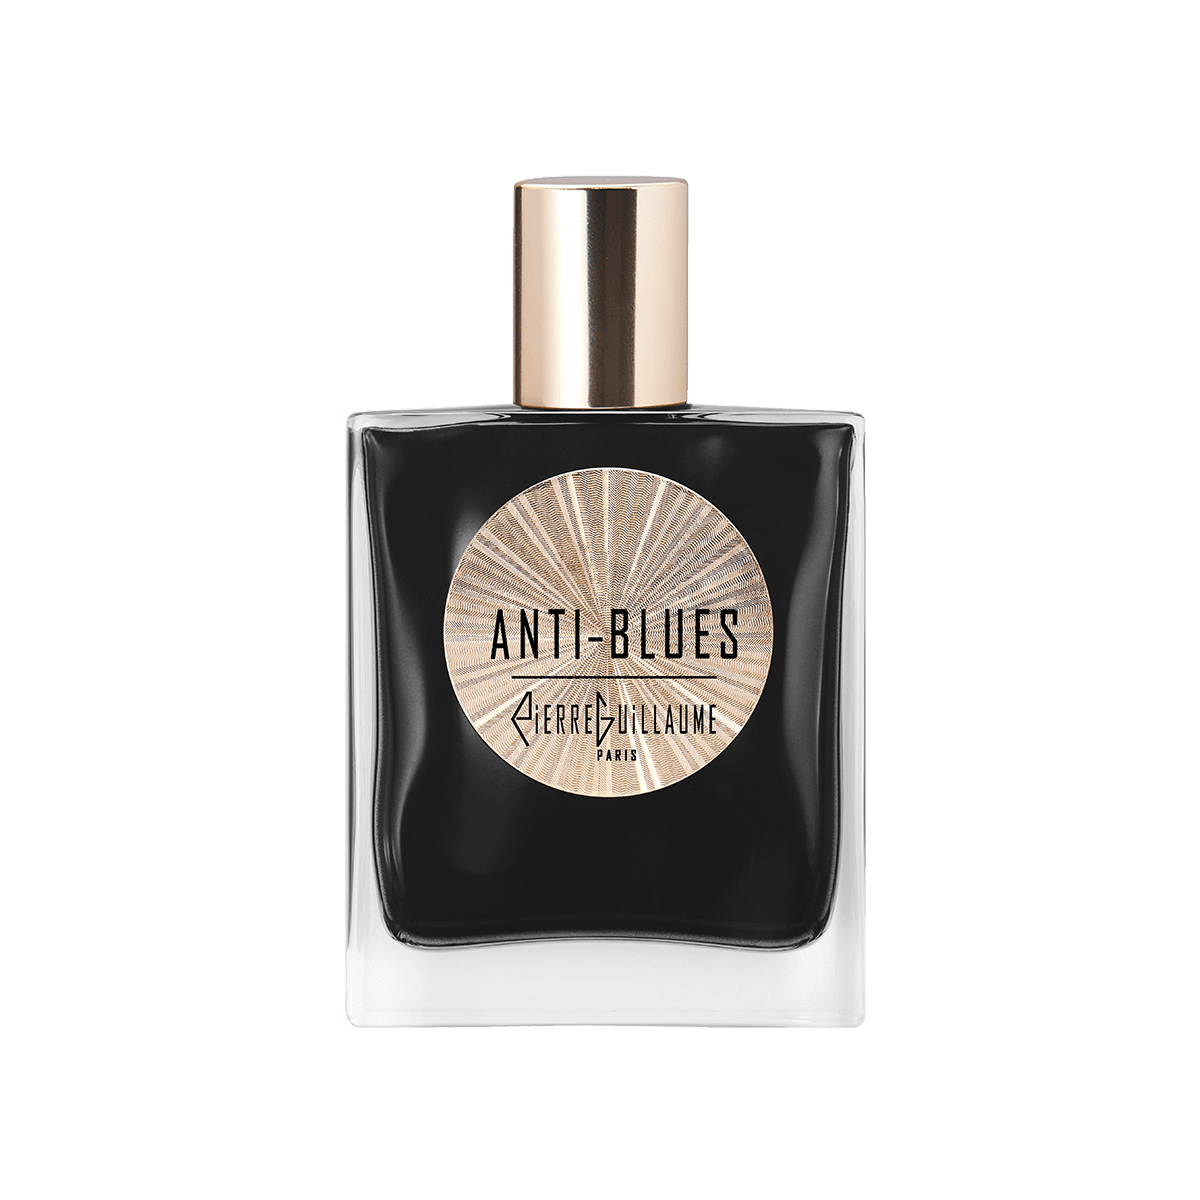 Pierre Guillaume Confidentiel - Anti-Blues 50 ml | Perfume Lounge